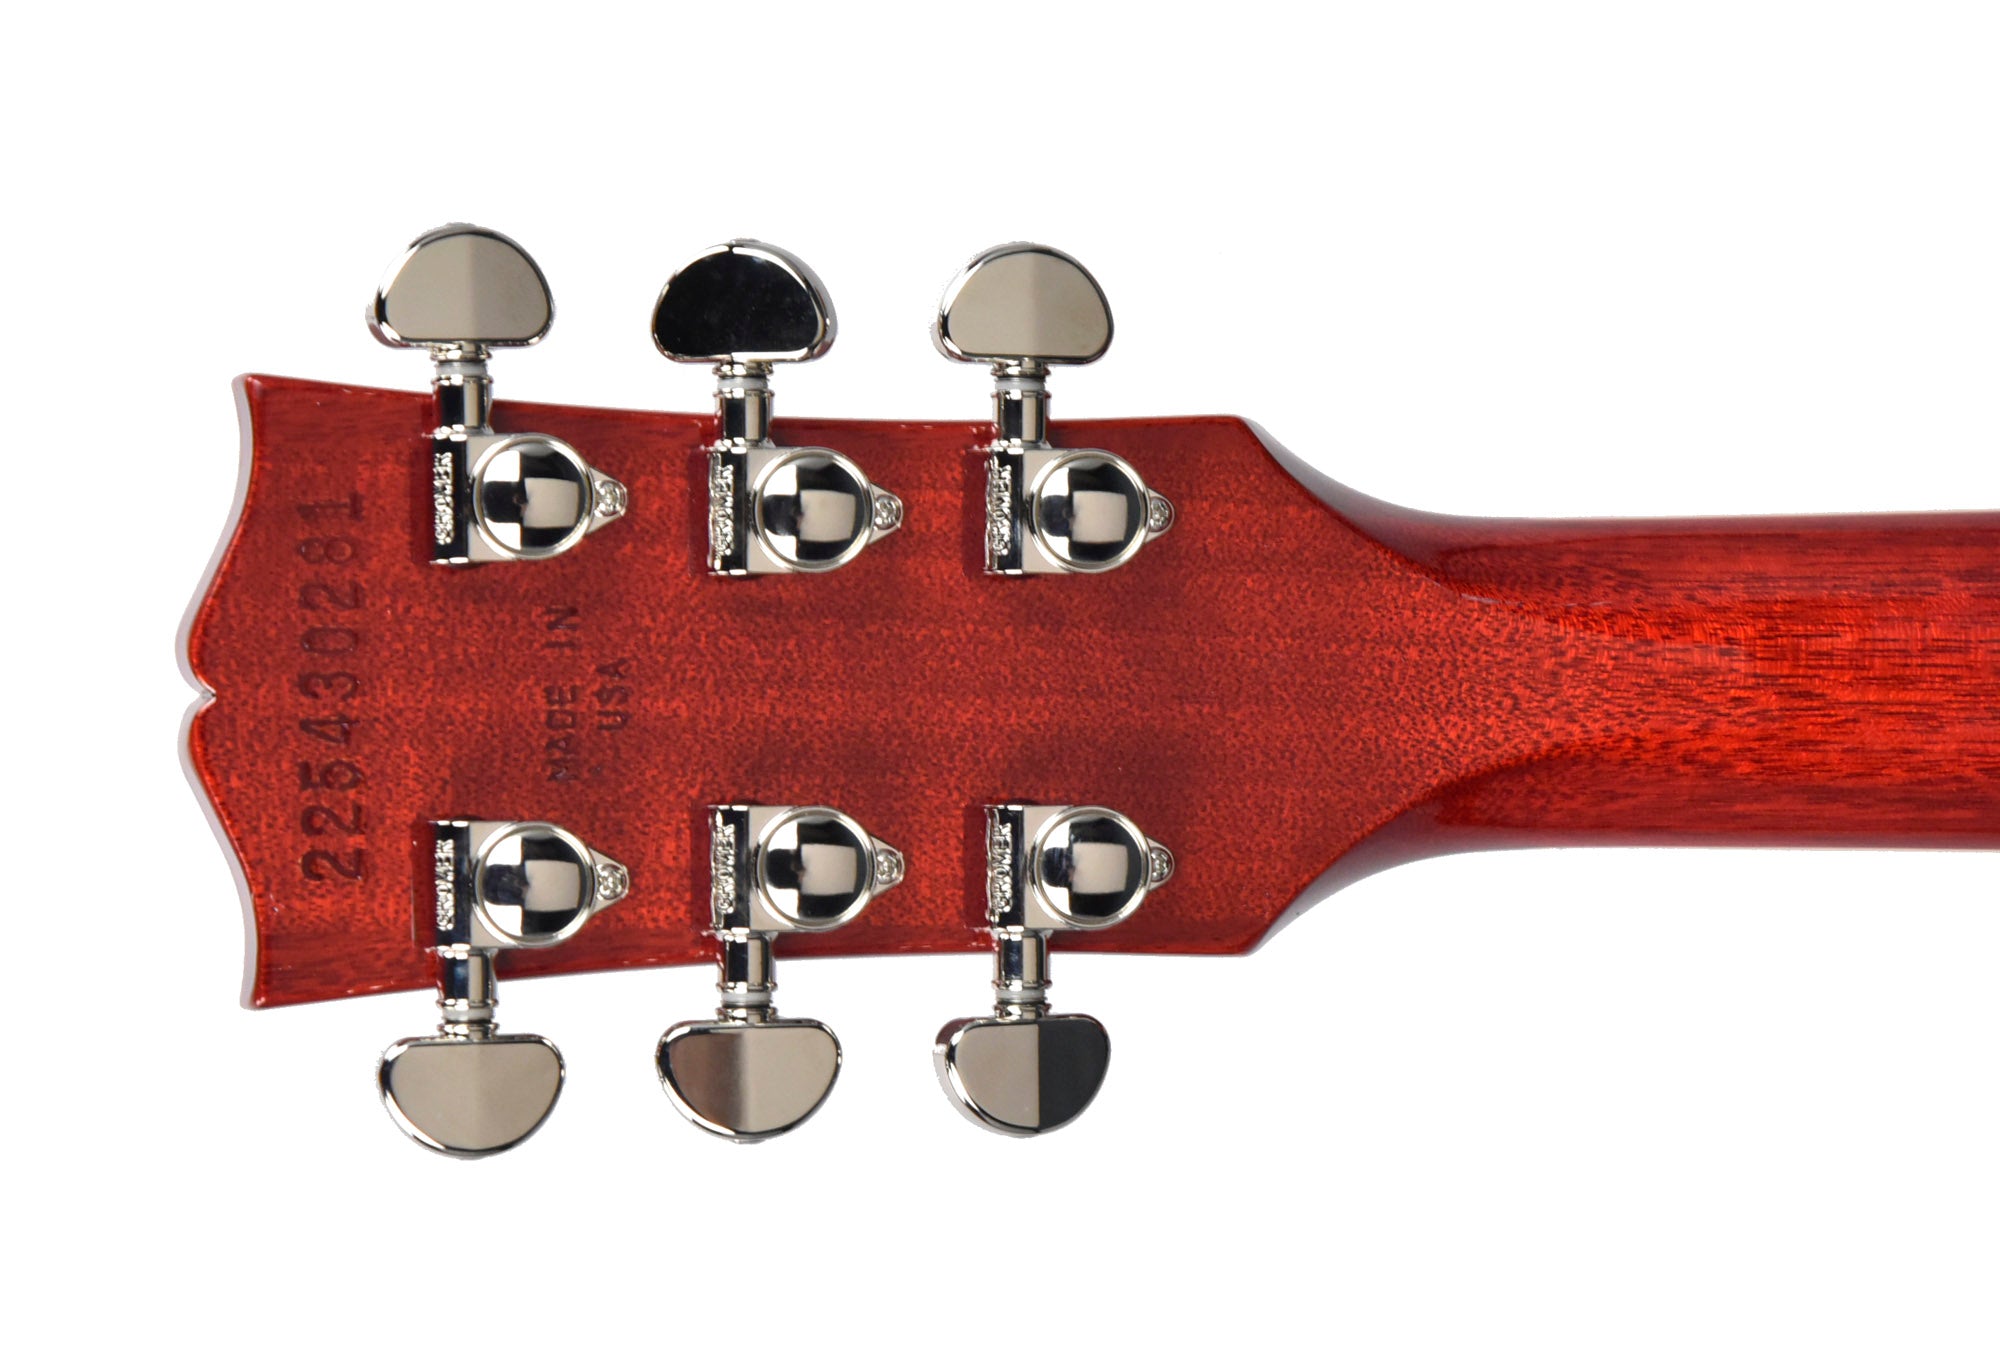 Red Guitars - Epiphone / Les Paul Standard 60s - Iced Tea 